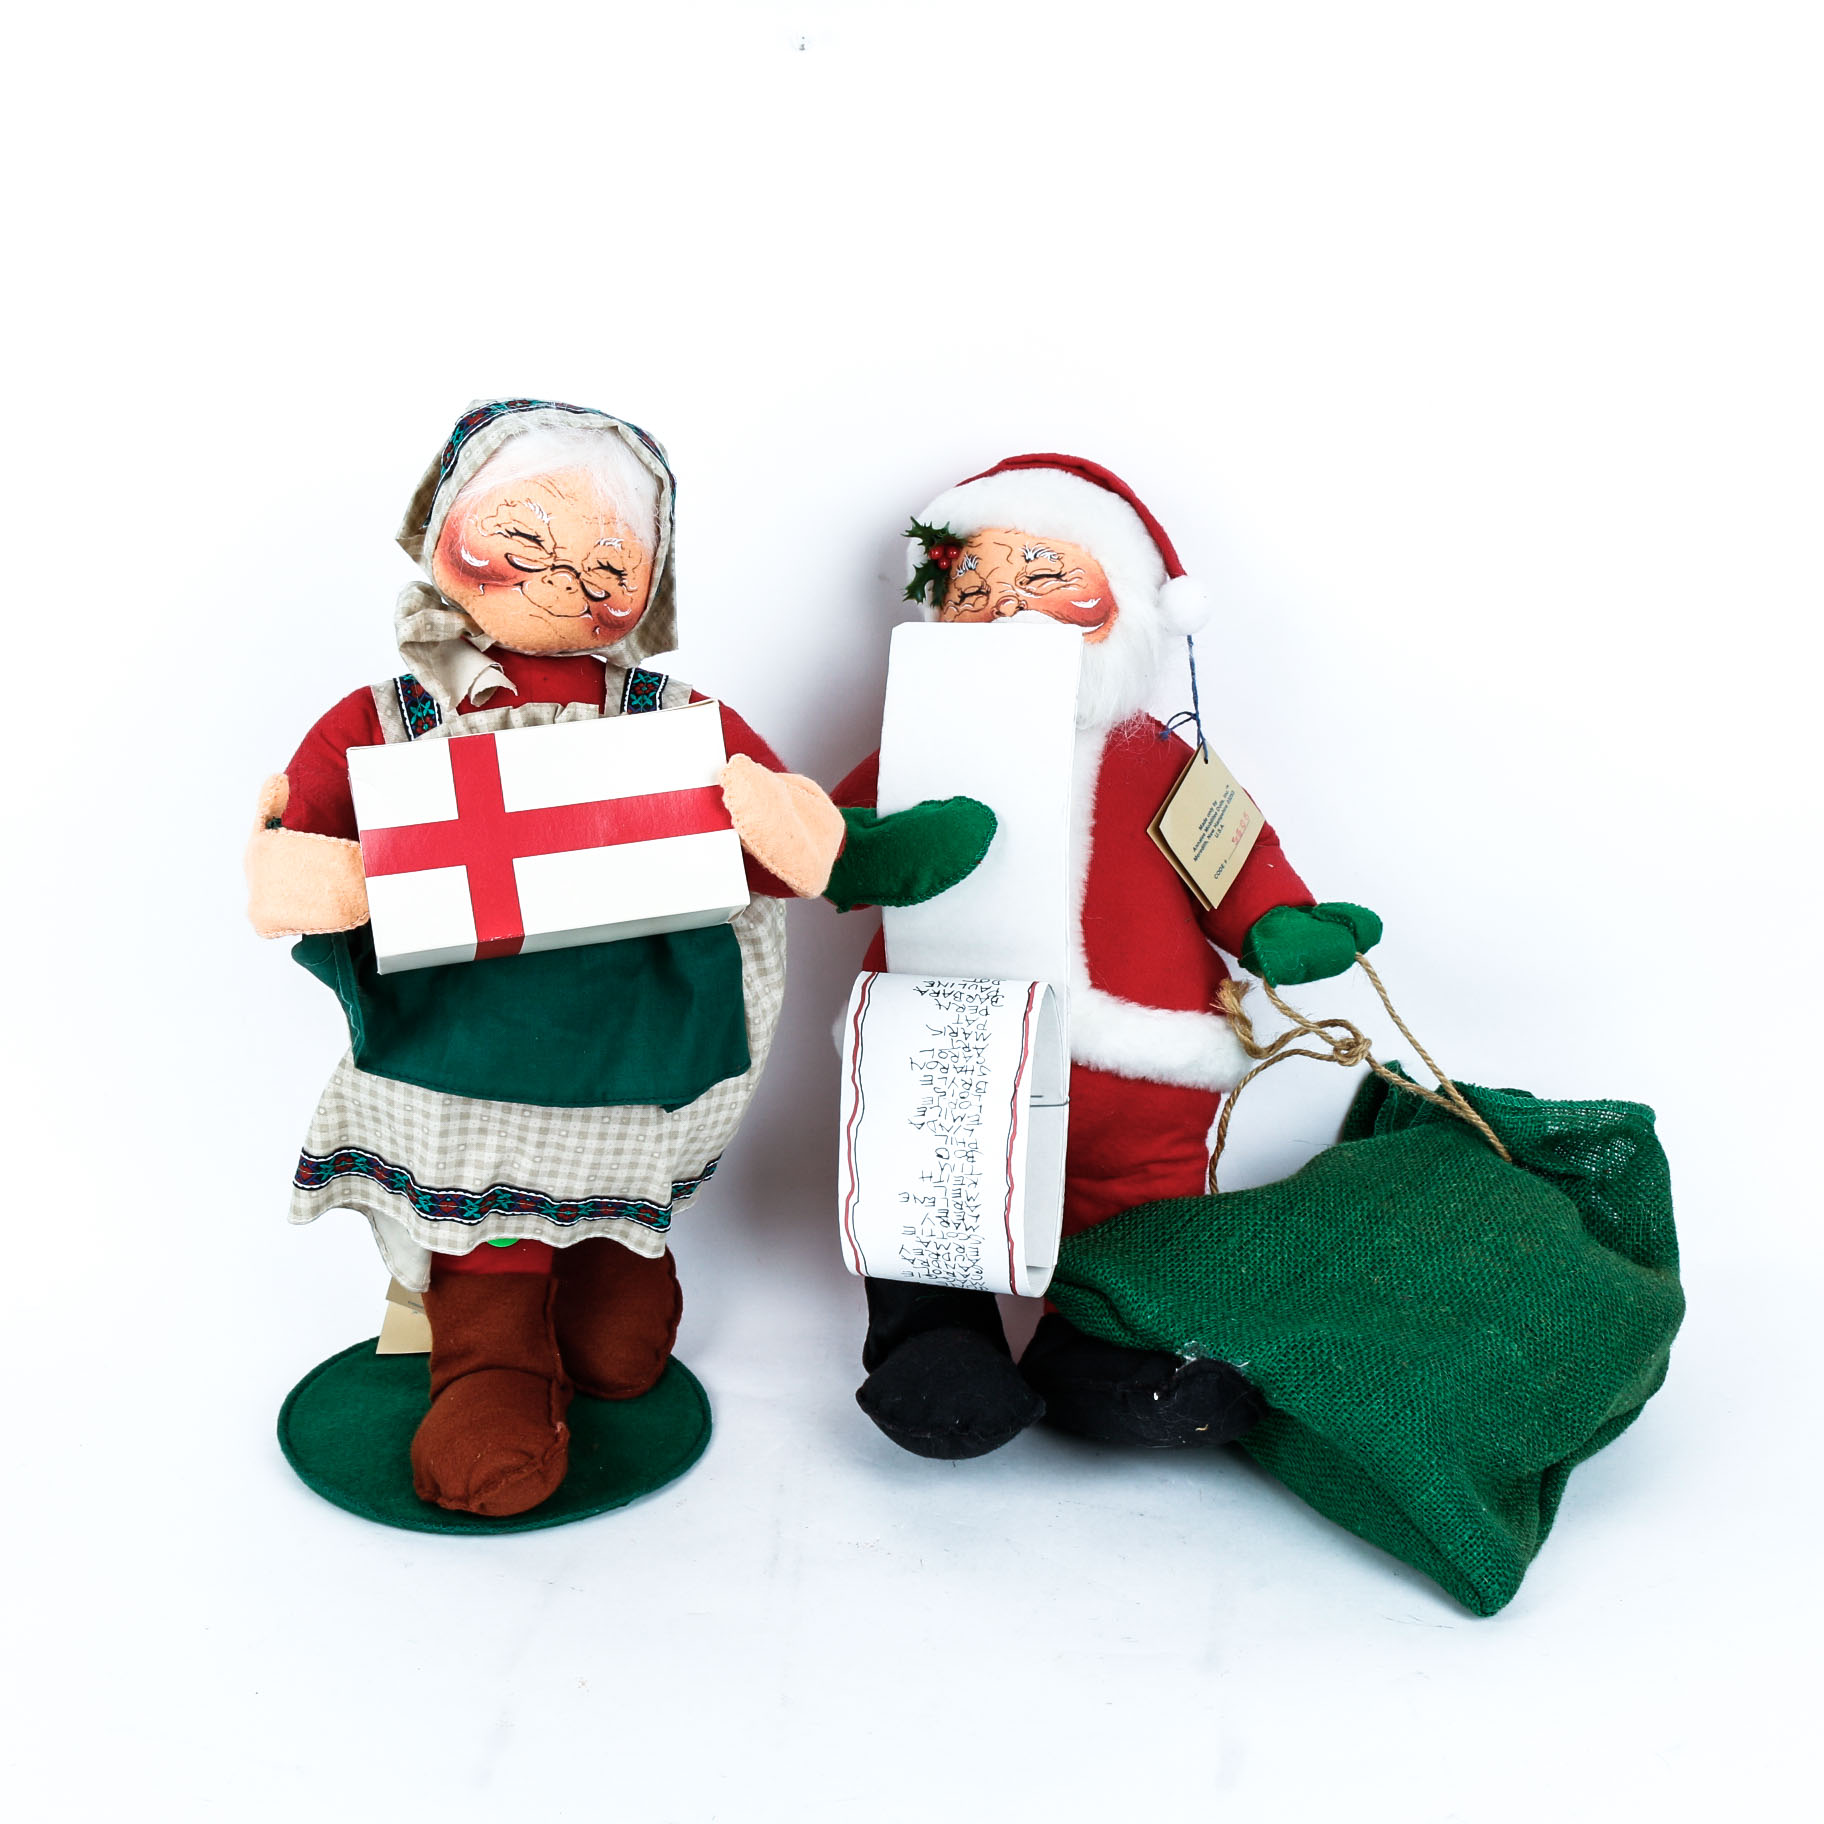 annalee santa and mrs claus dolls